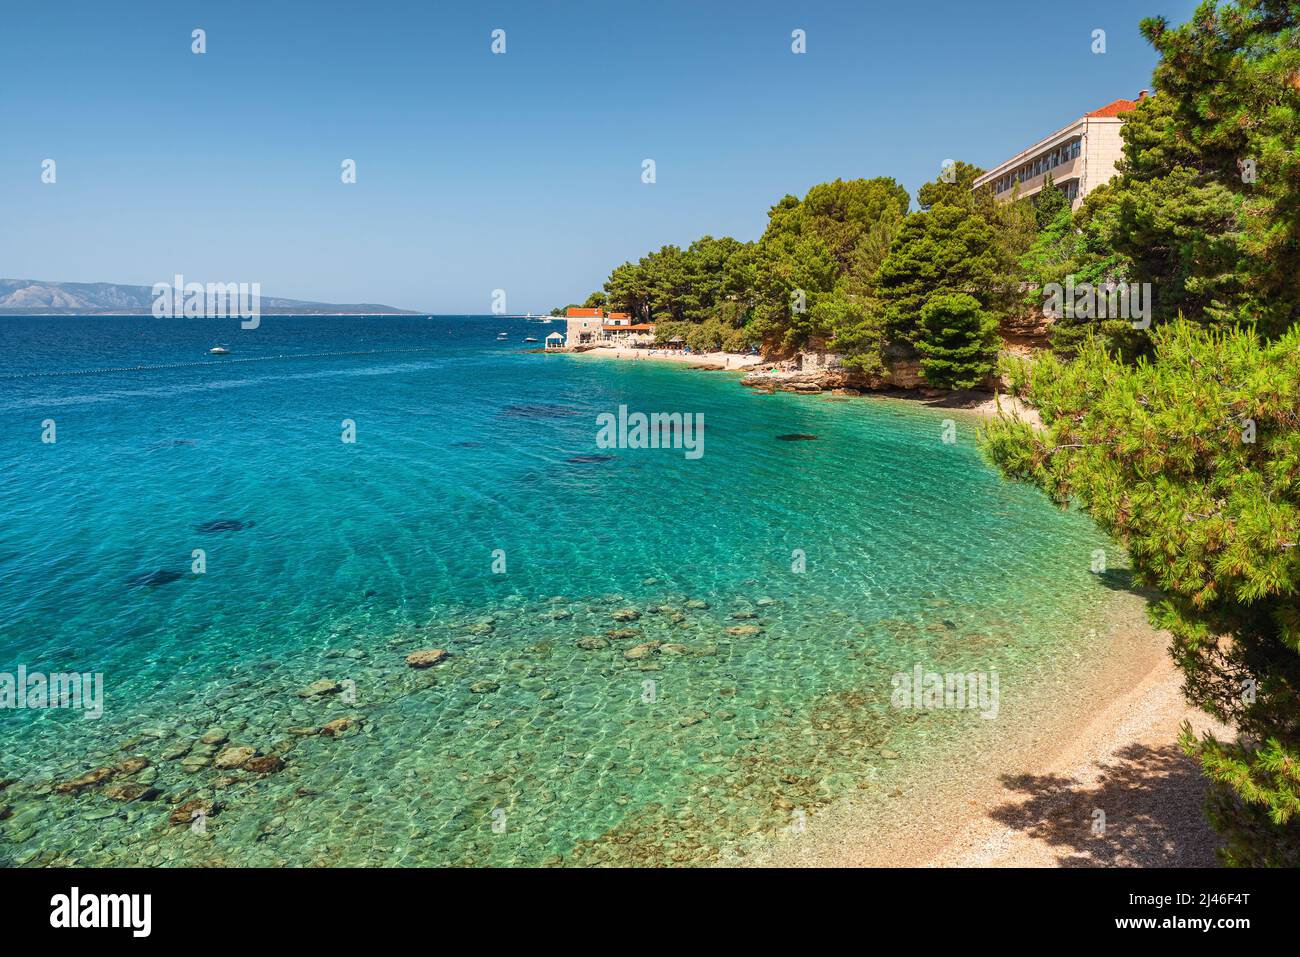 Croatia, Brac island, Bol. Beautiful view of pebble beach on Adriatic sea with small restaurant. Summer vacation resort Stock Photo